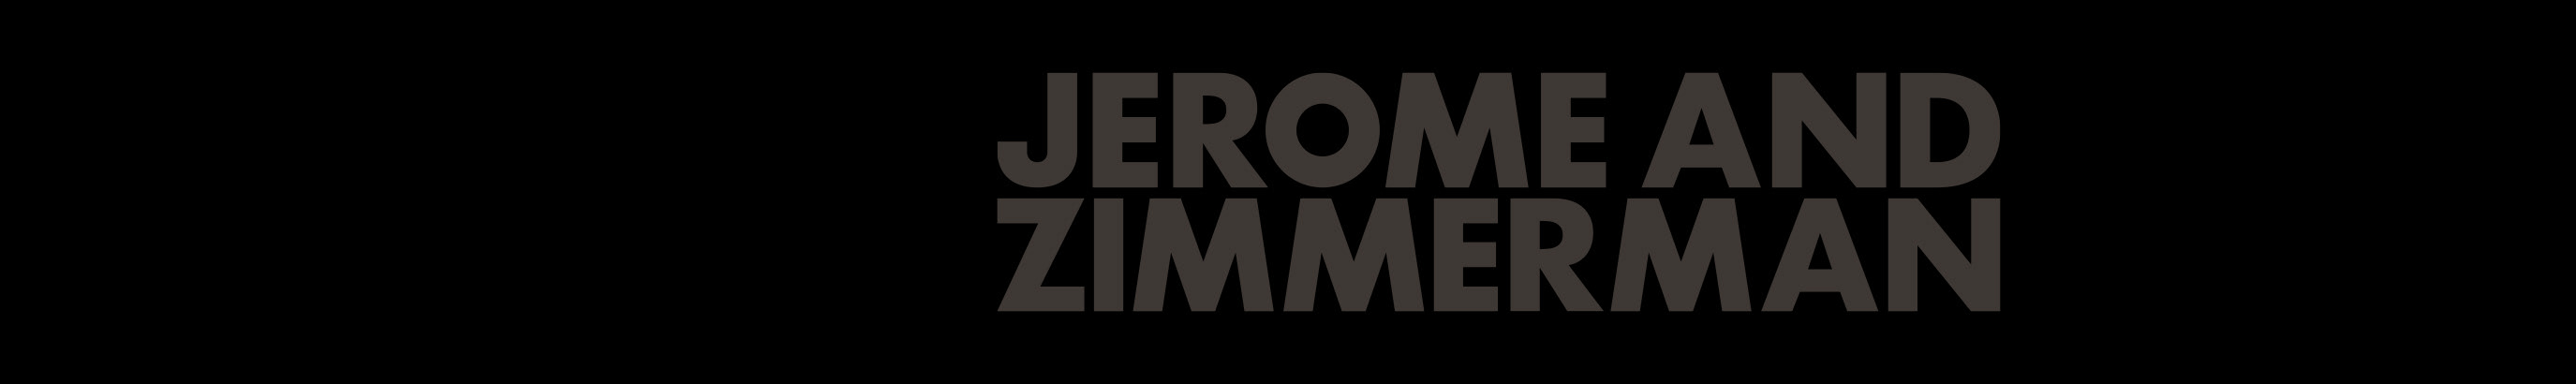 Banner de perfil de Jerome & Zimmerman